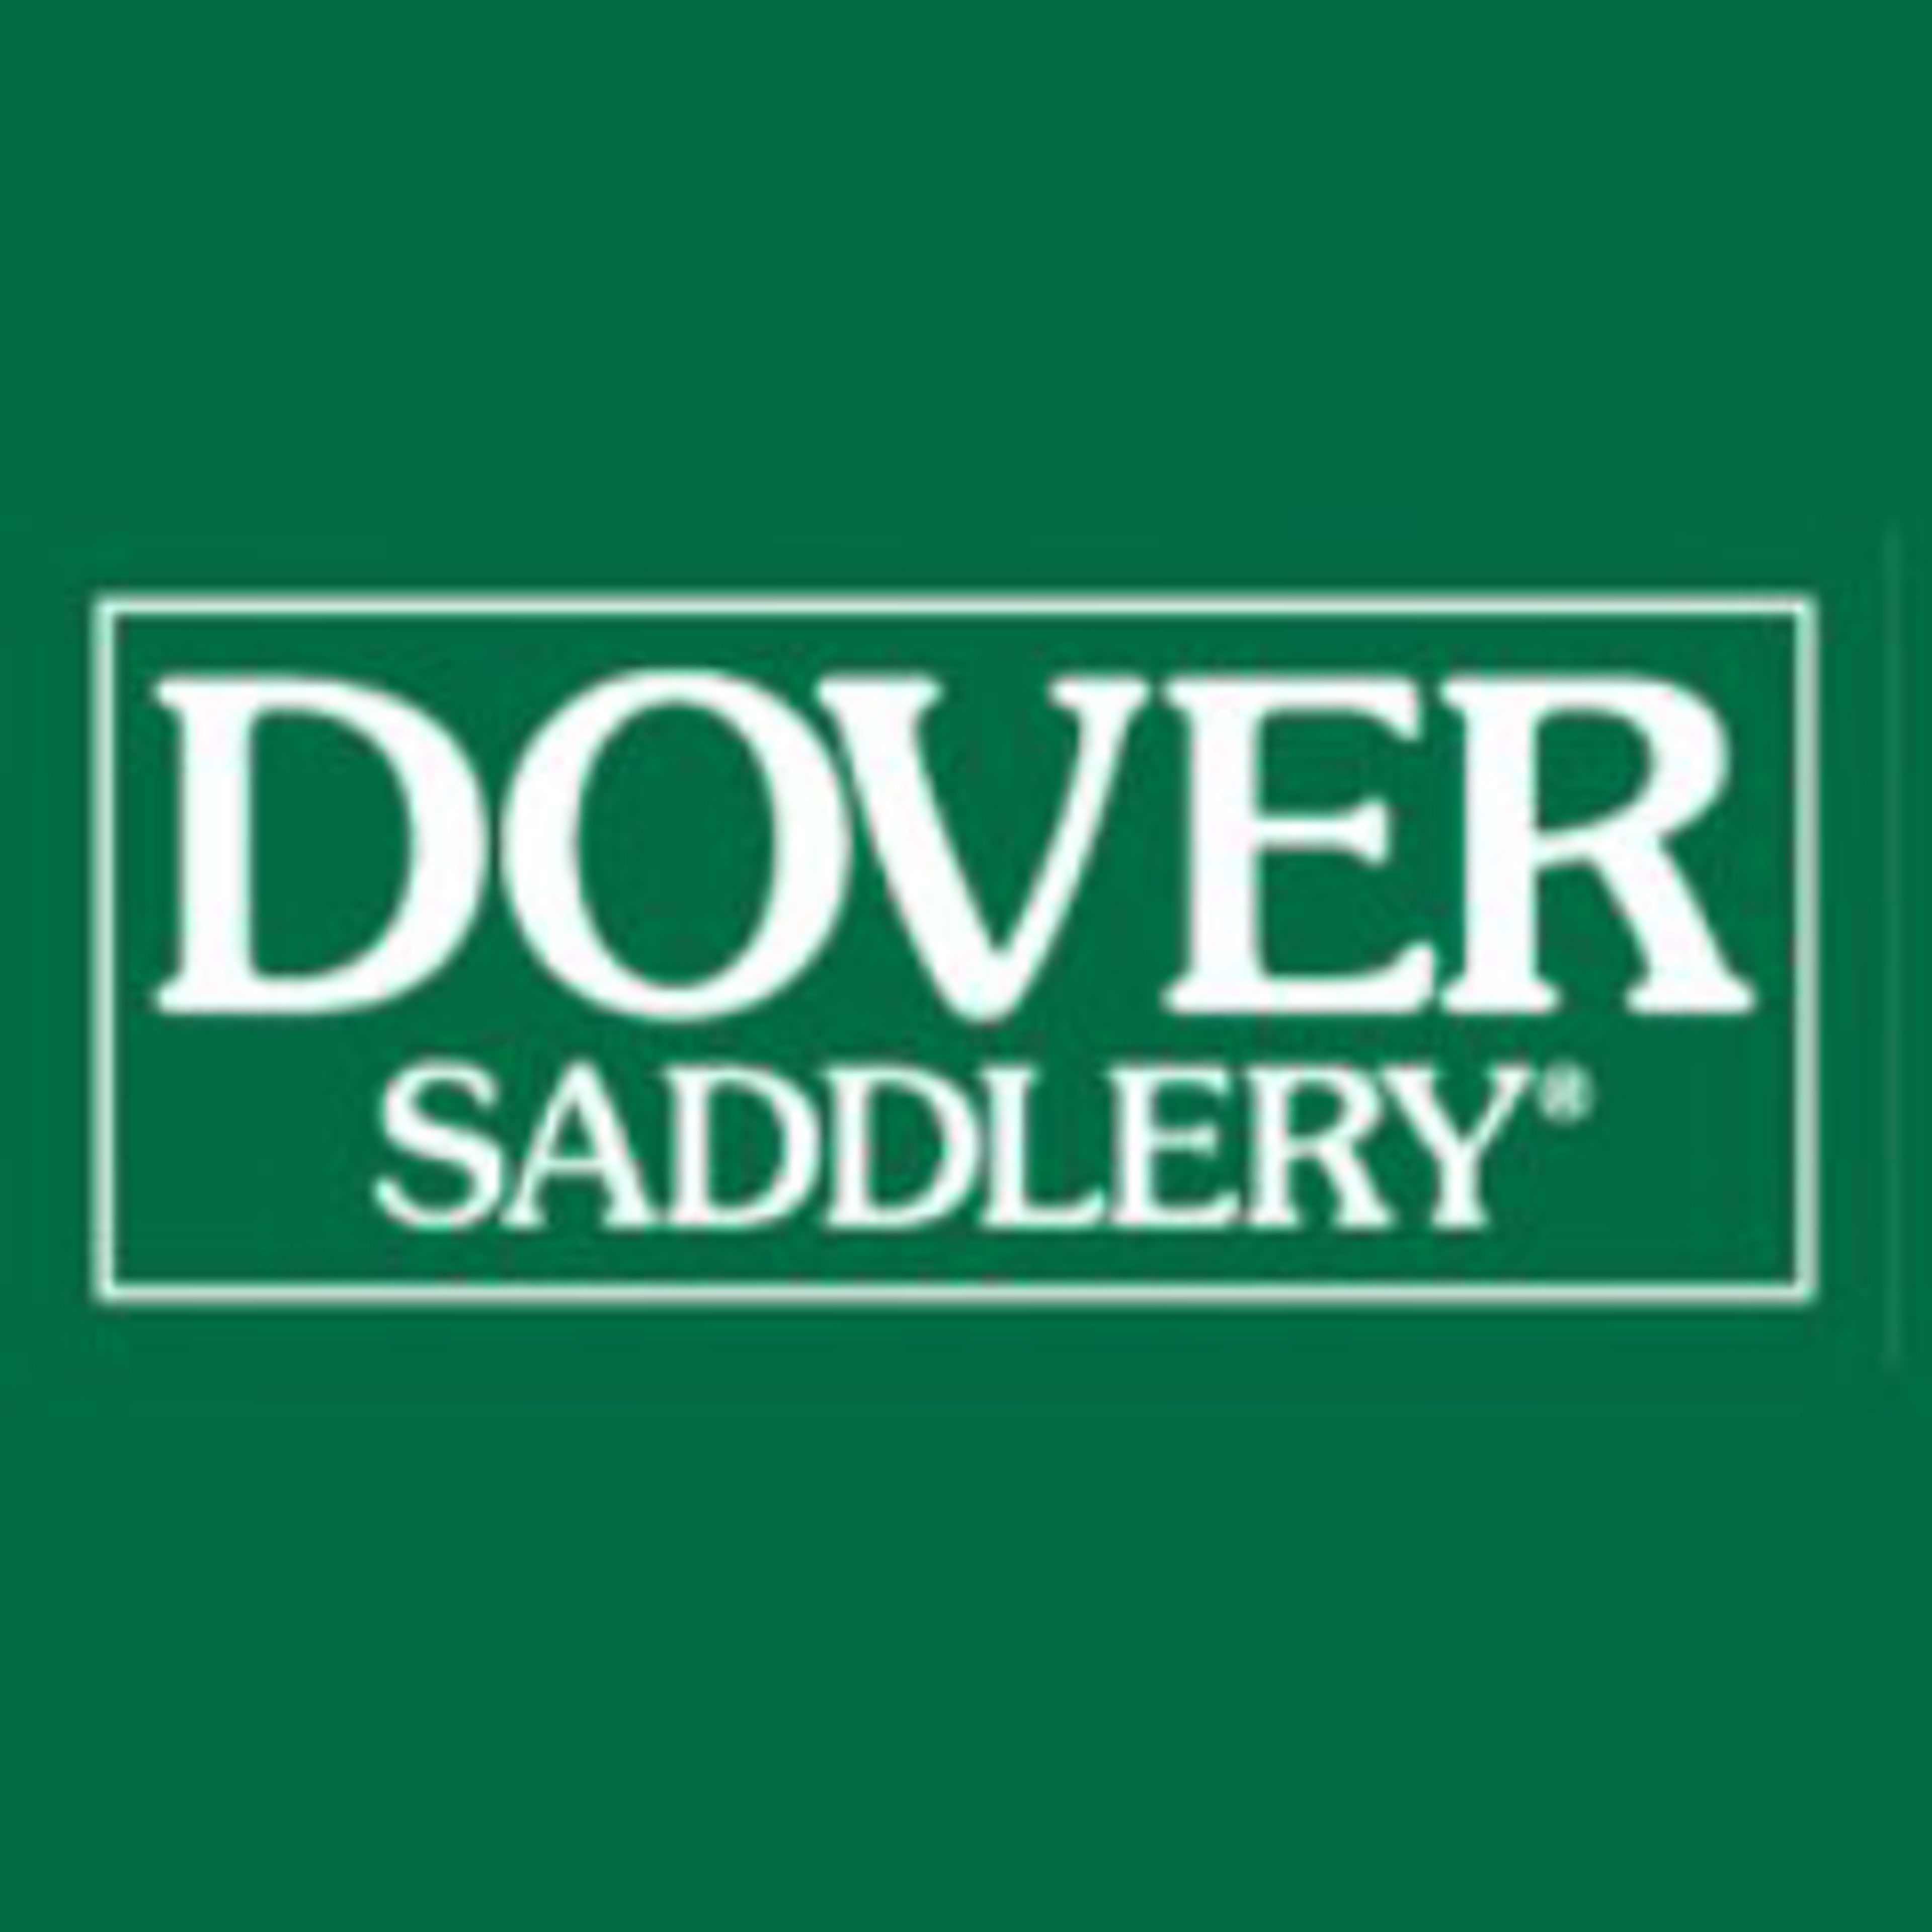 Dover SaddleryCode